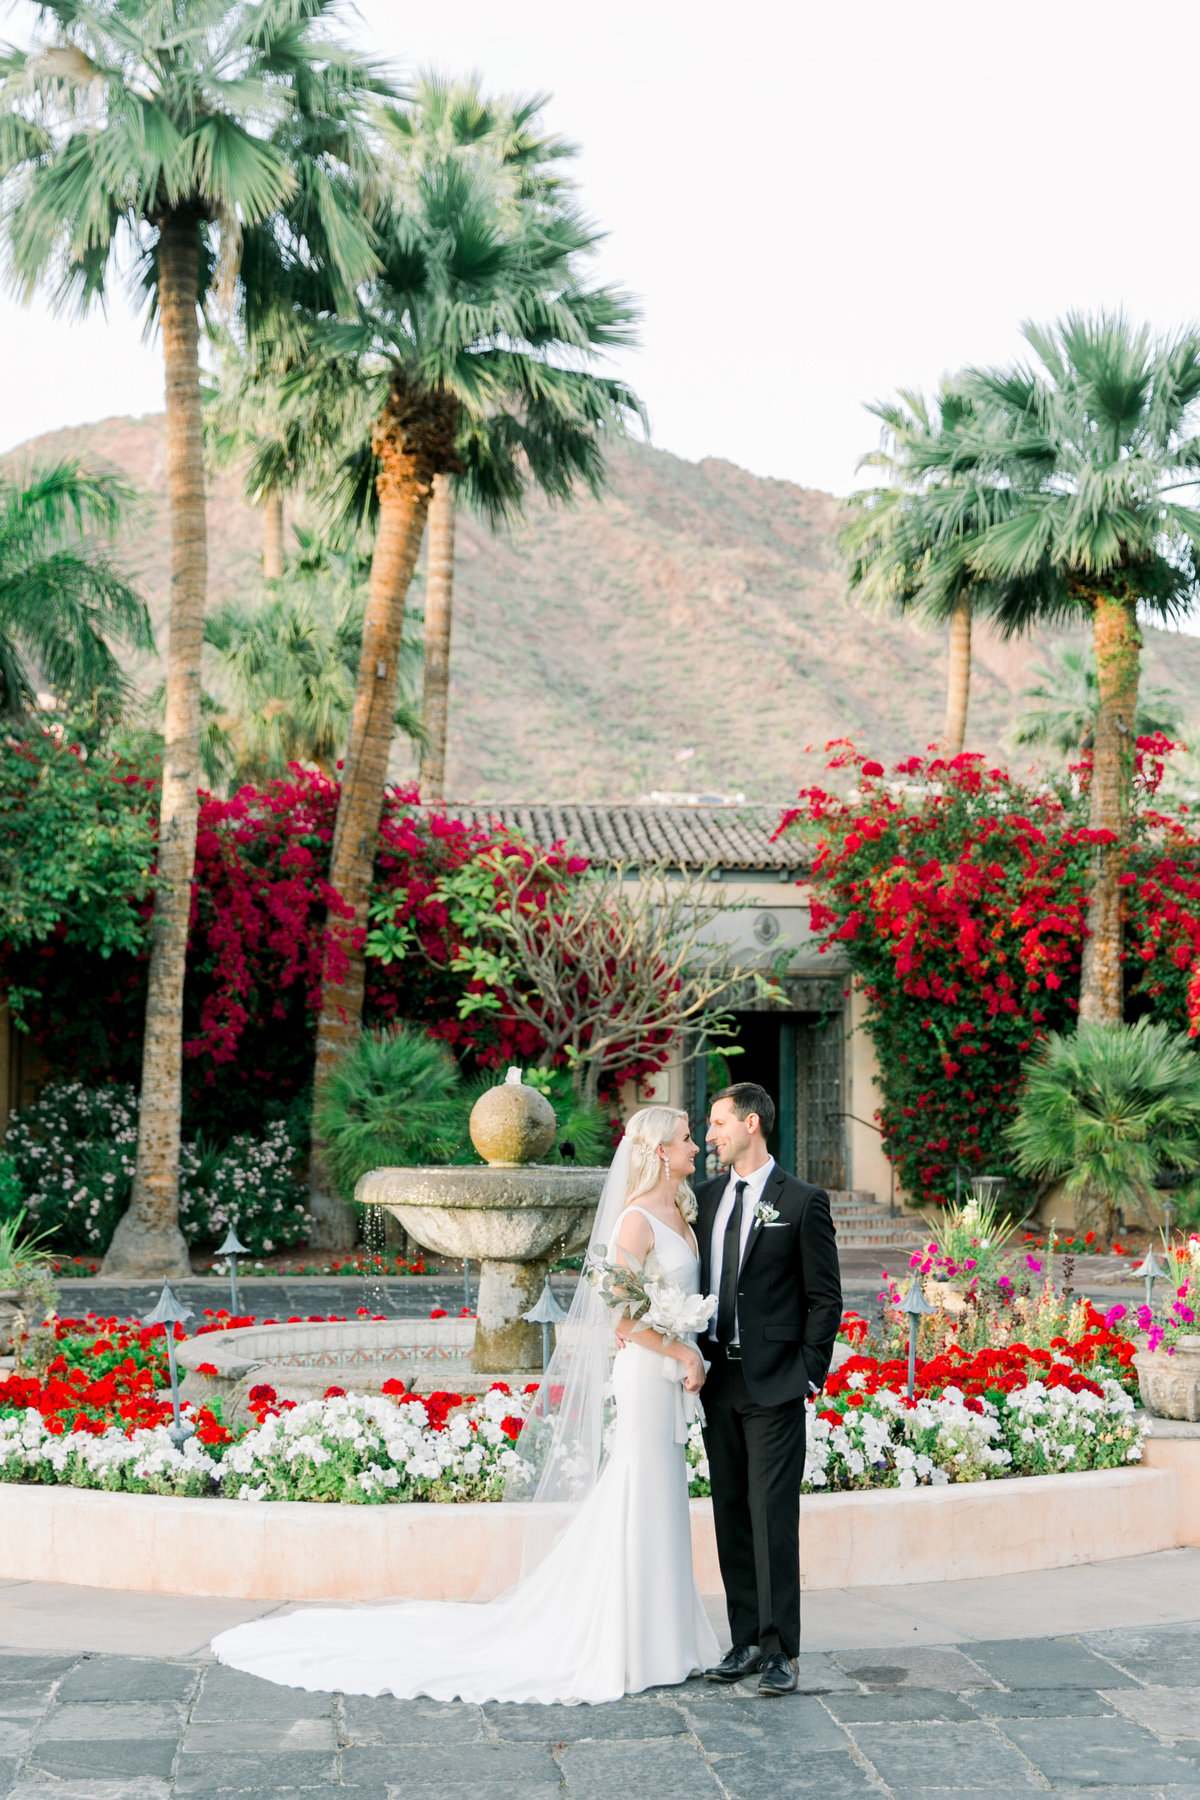 Karlie Colleen Photography - The Royal Palms - Arizona Wedding - Alex & Alex-568